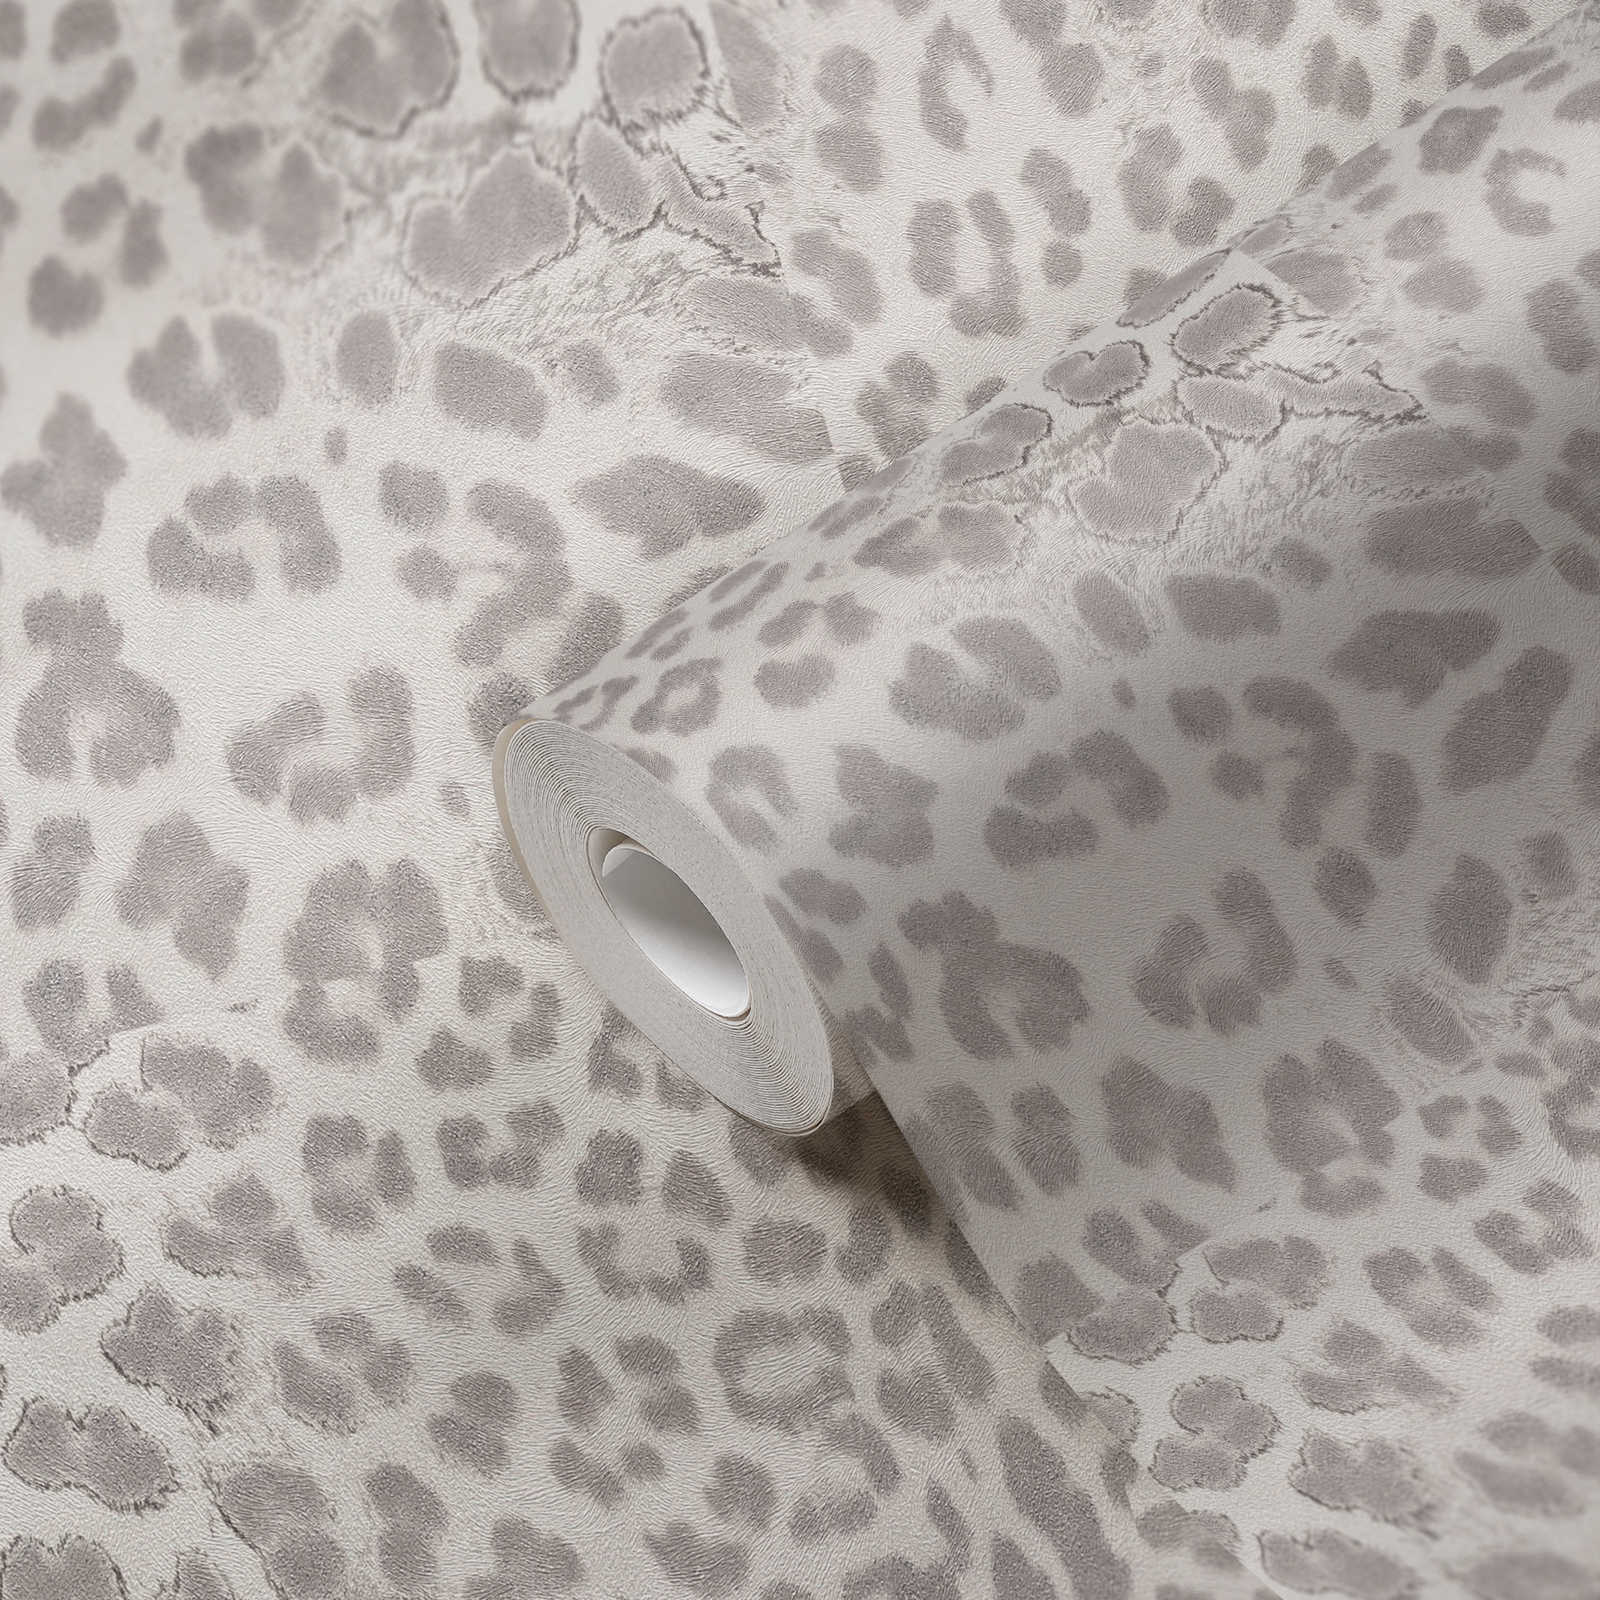             Animal Print Tapete Grau mit metallic Leopardenmuster
        